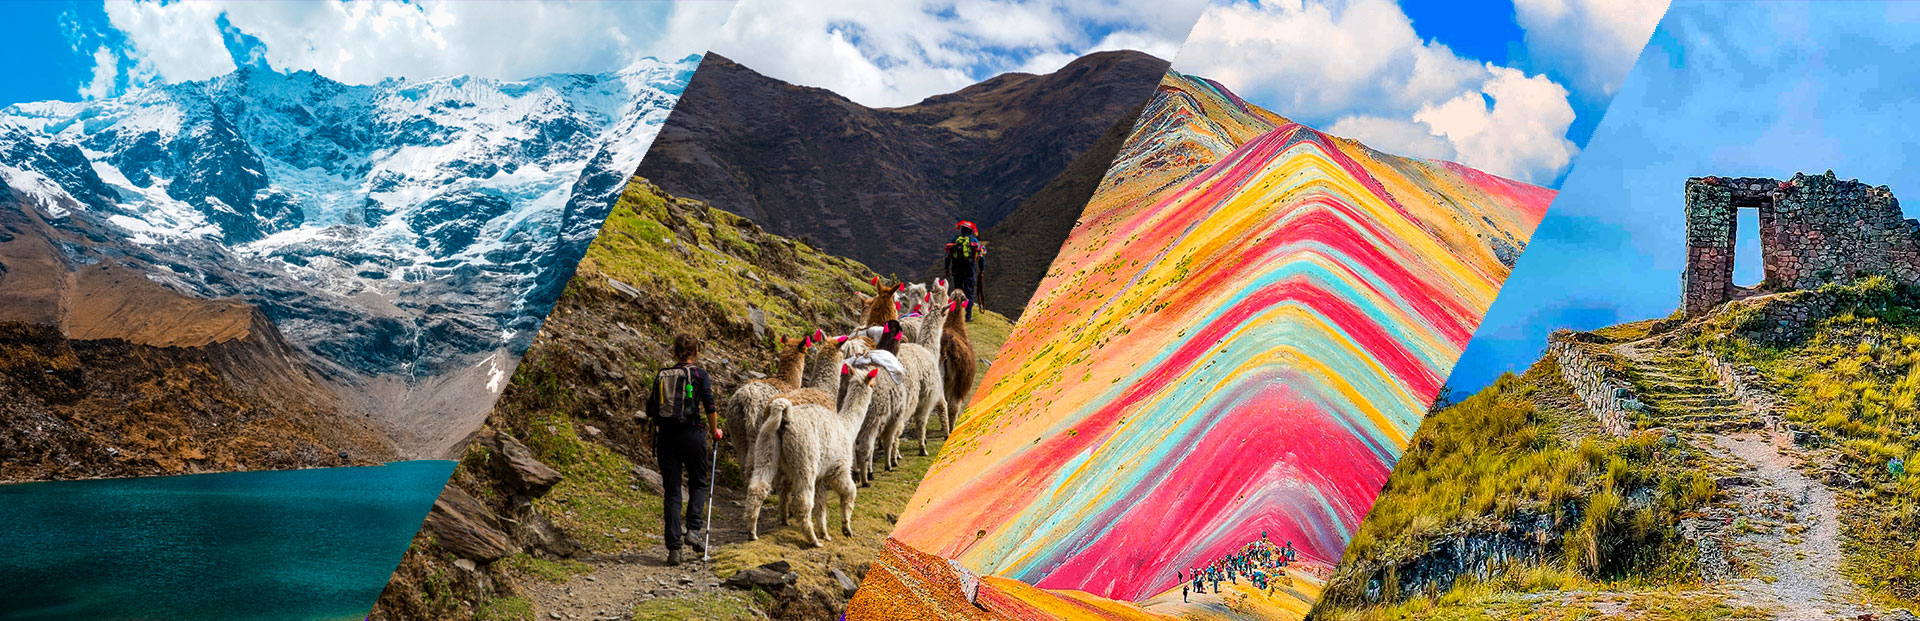 Alternative trek to Machu Picchu